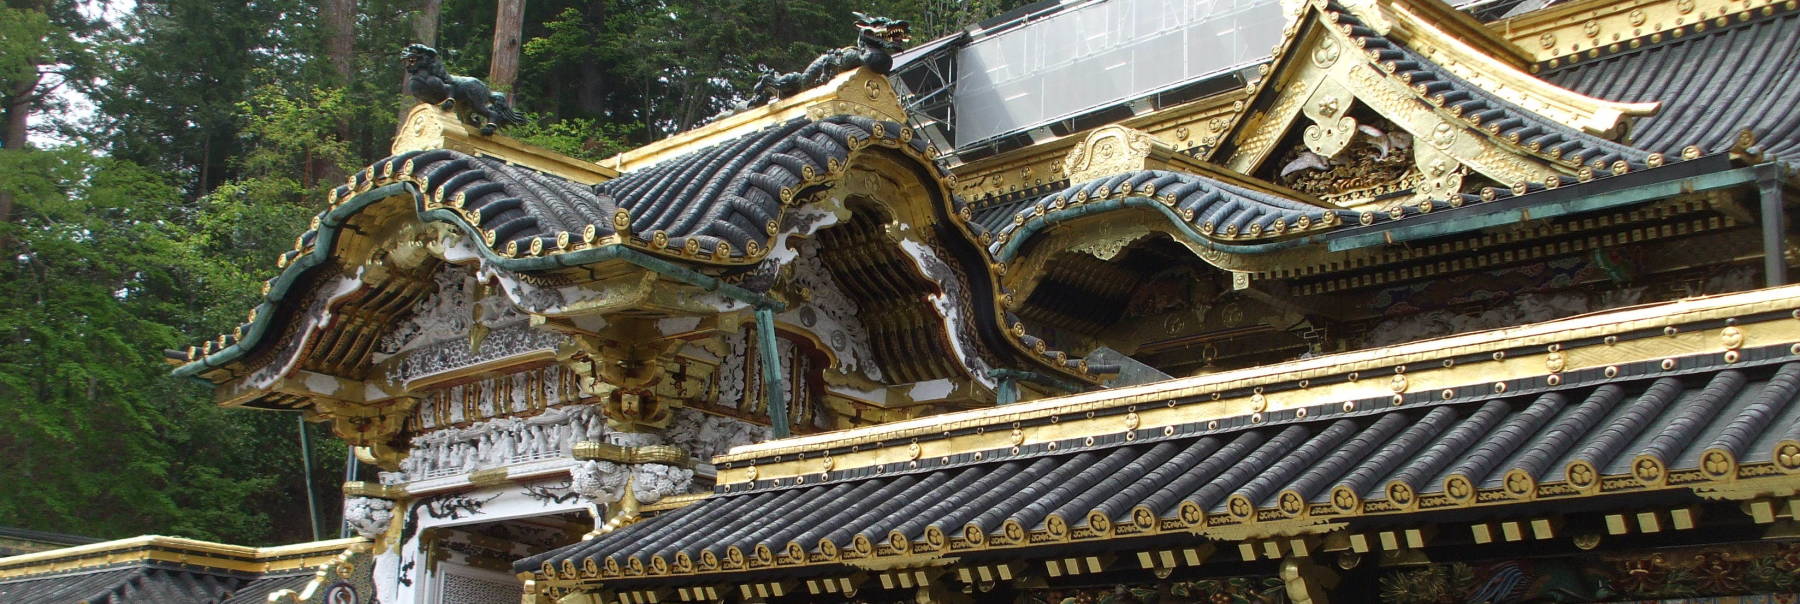 Tōshō-gū, the shrine of shōgun Tokugawa Ieyasu